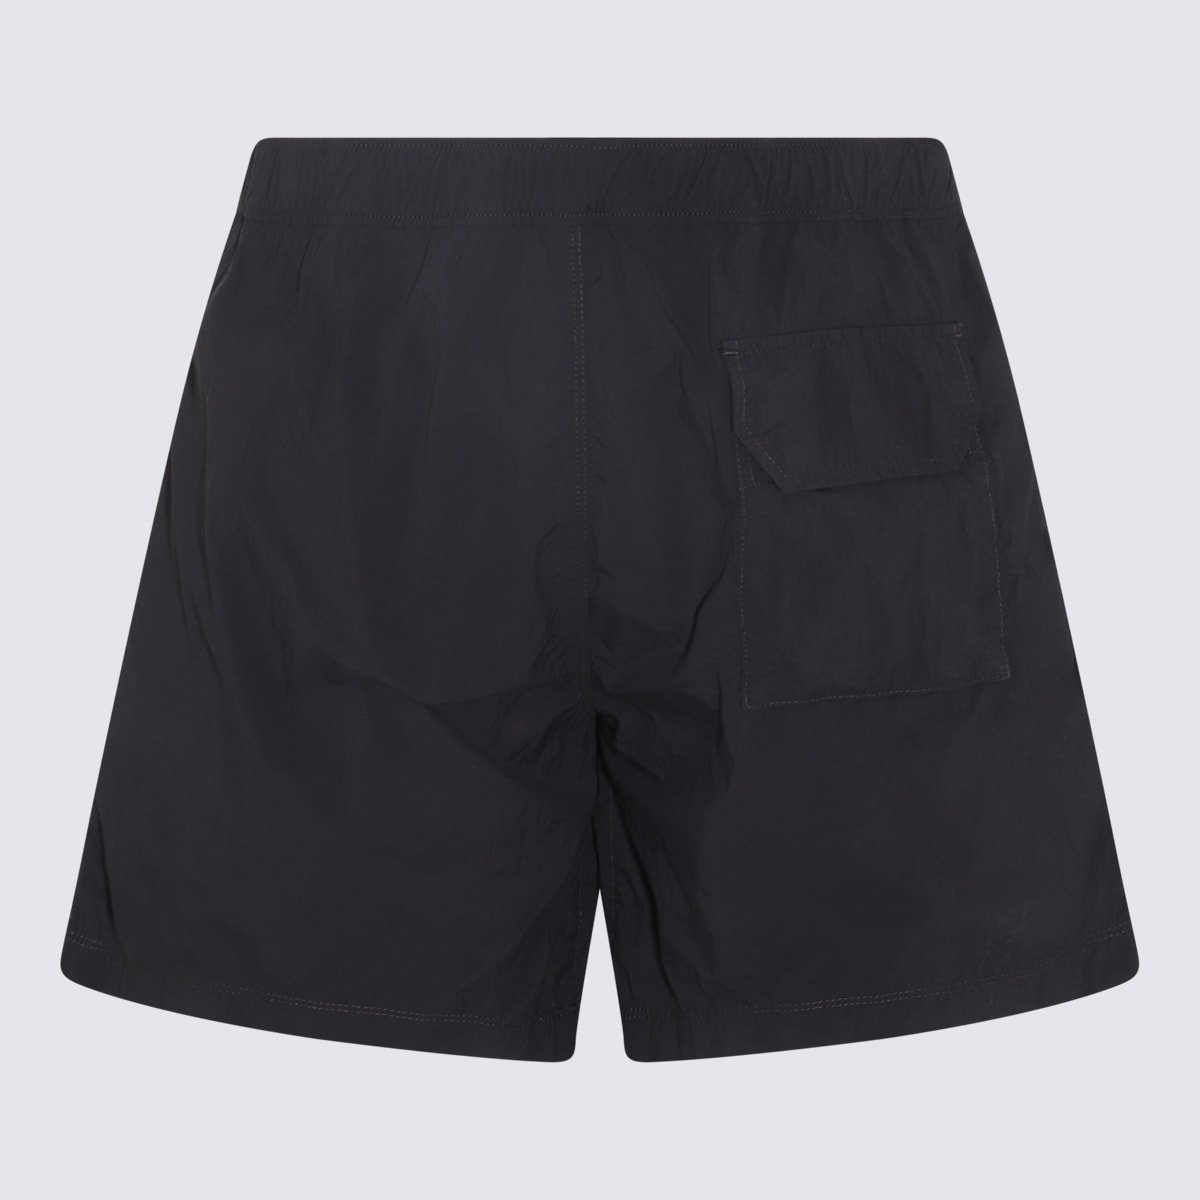 Black Stretch Shorts